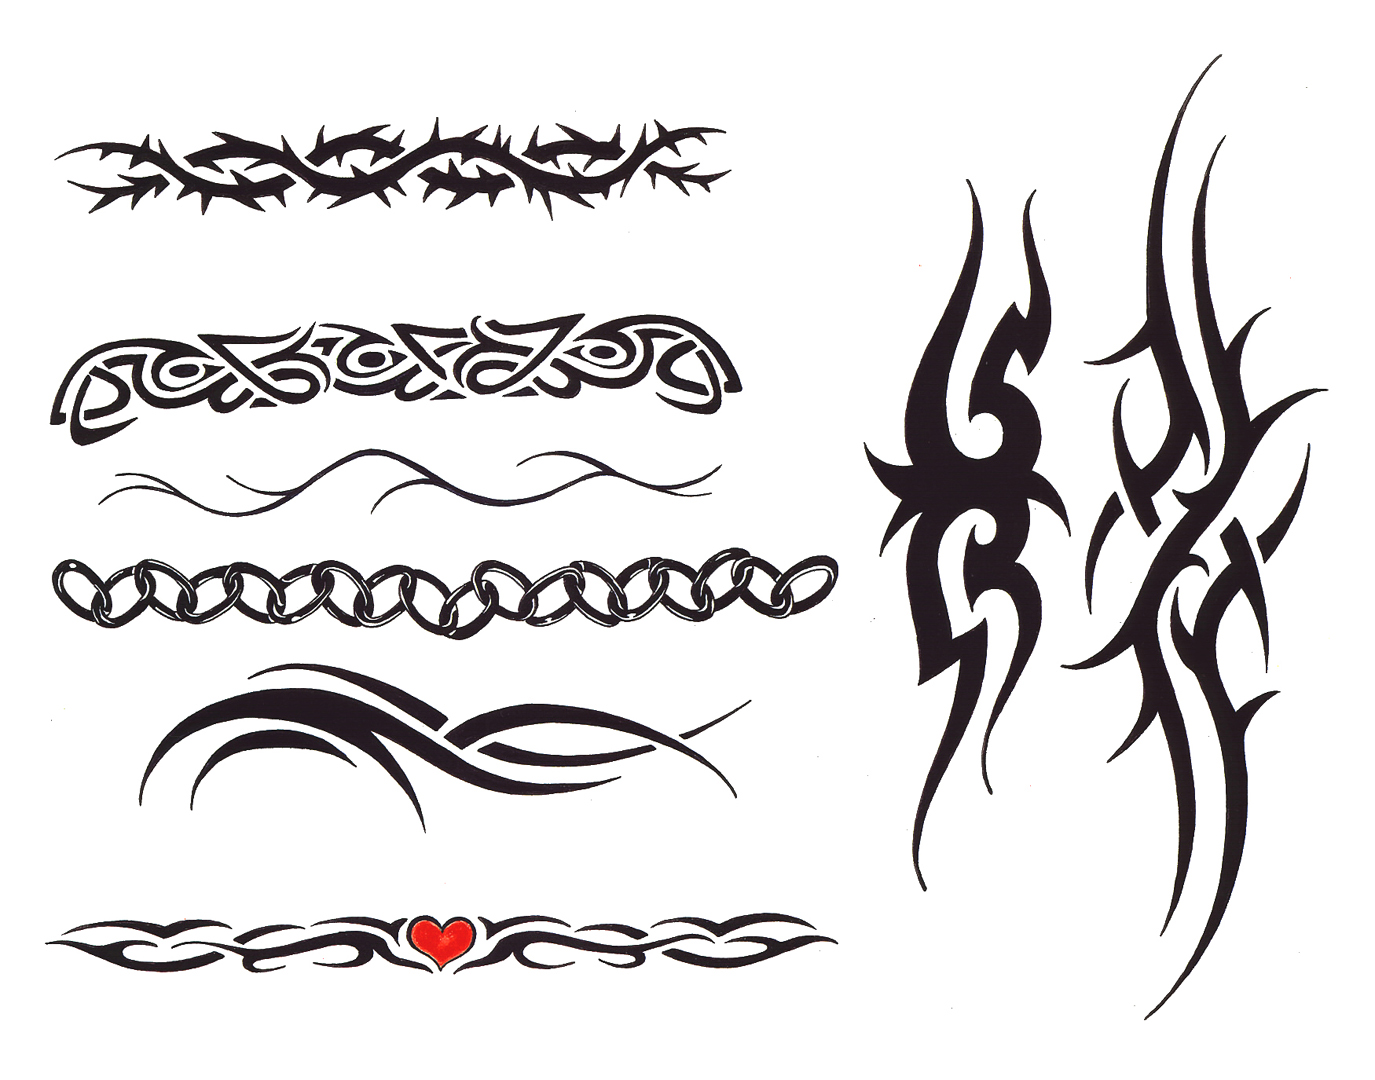 Tribal Bands Tattoos Designs | Cool Tattoos Designs